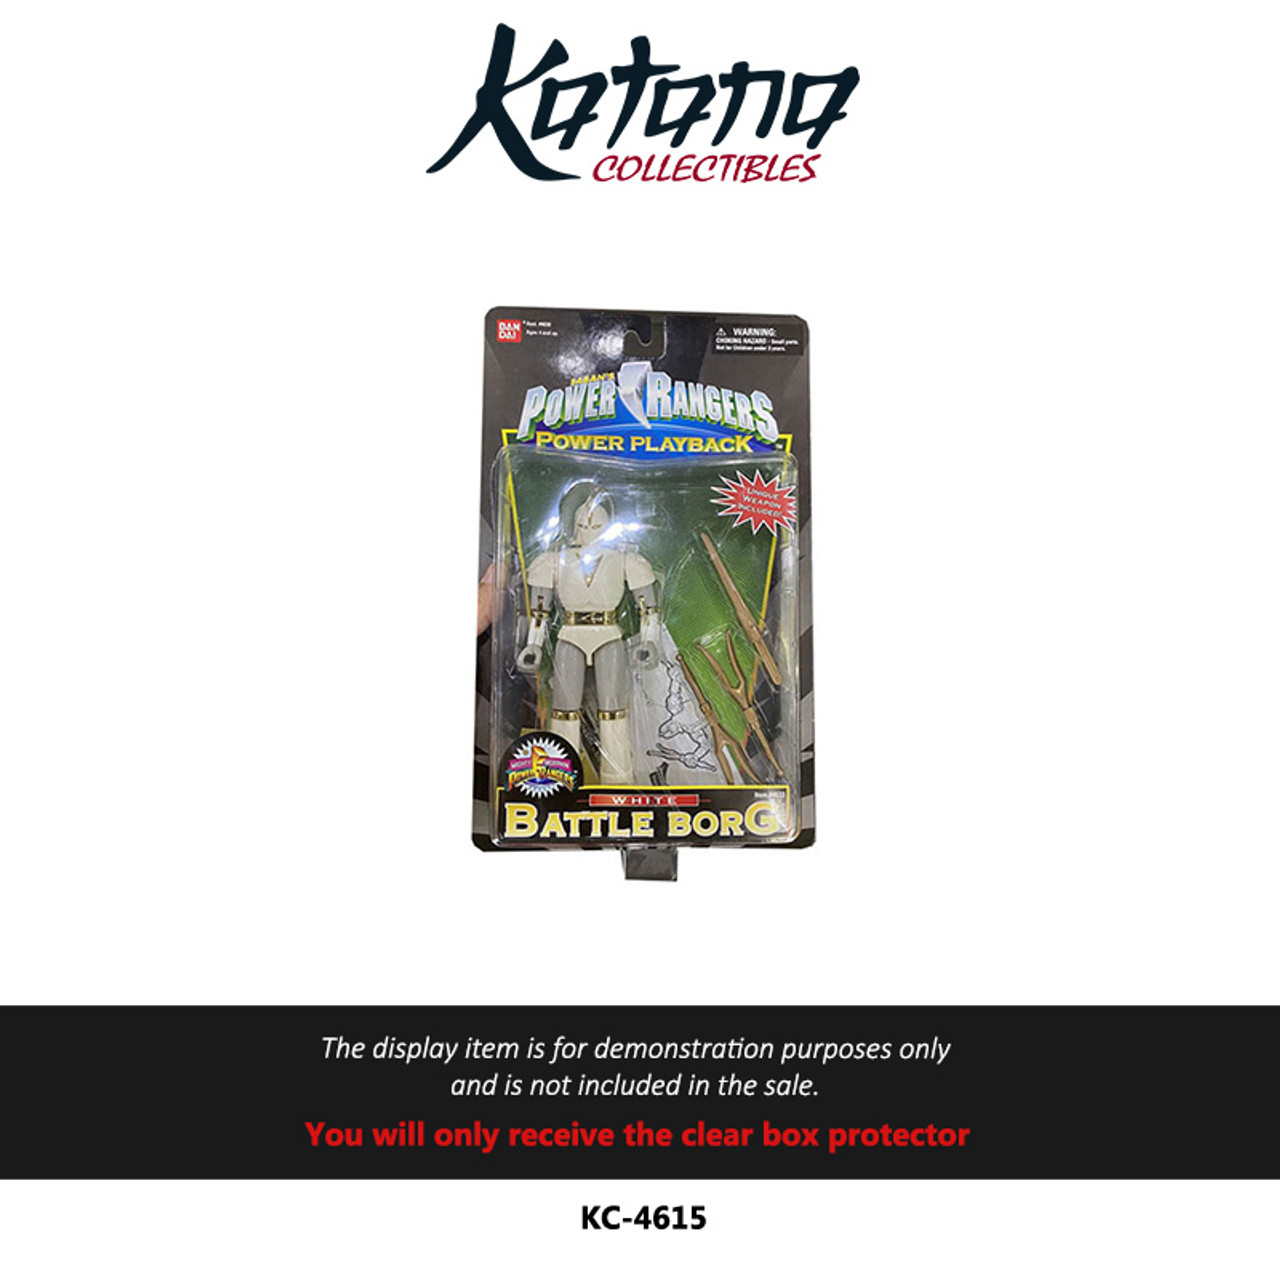 Katana Collectibles Protector For Power Rangers White Battle Borg Figure